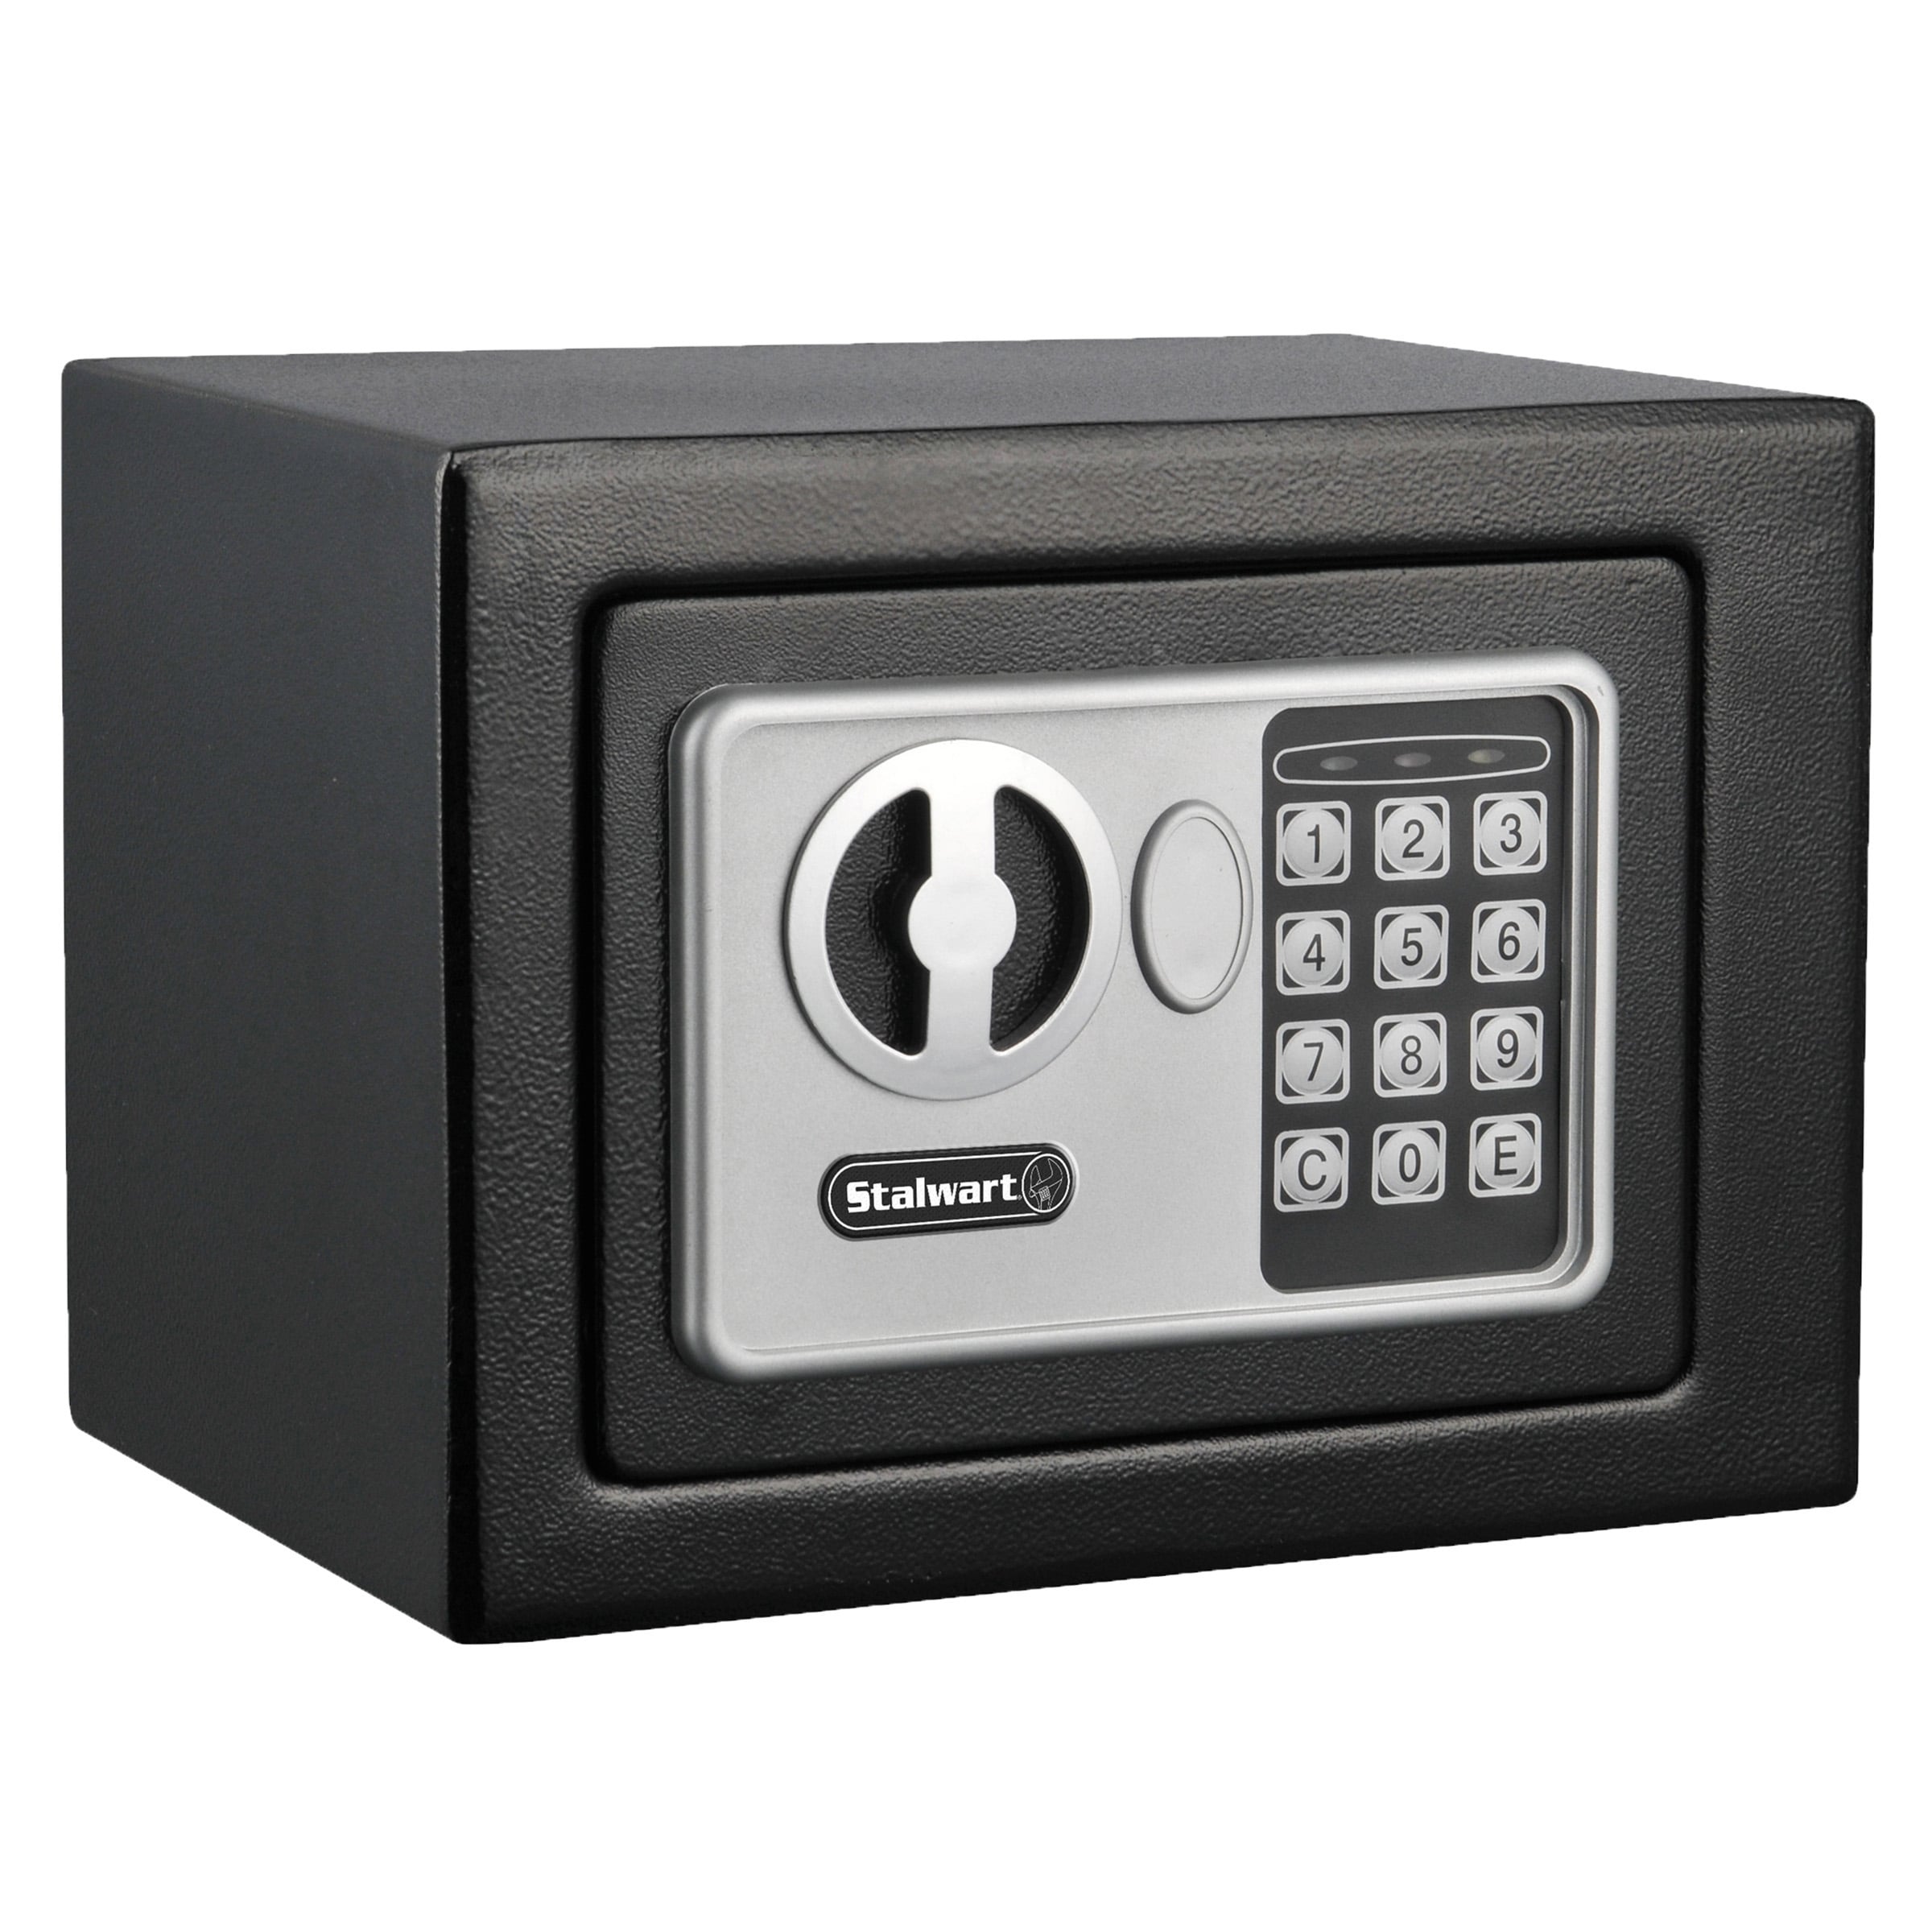 NEW DIGITAL ELECTRONIC SAFE SECURITY BOX WALL JEWELRY GUN CASH BLACK MEDIUM s 